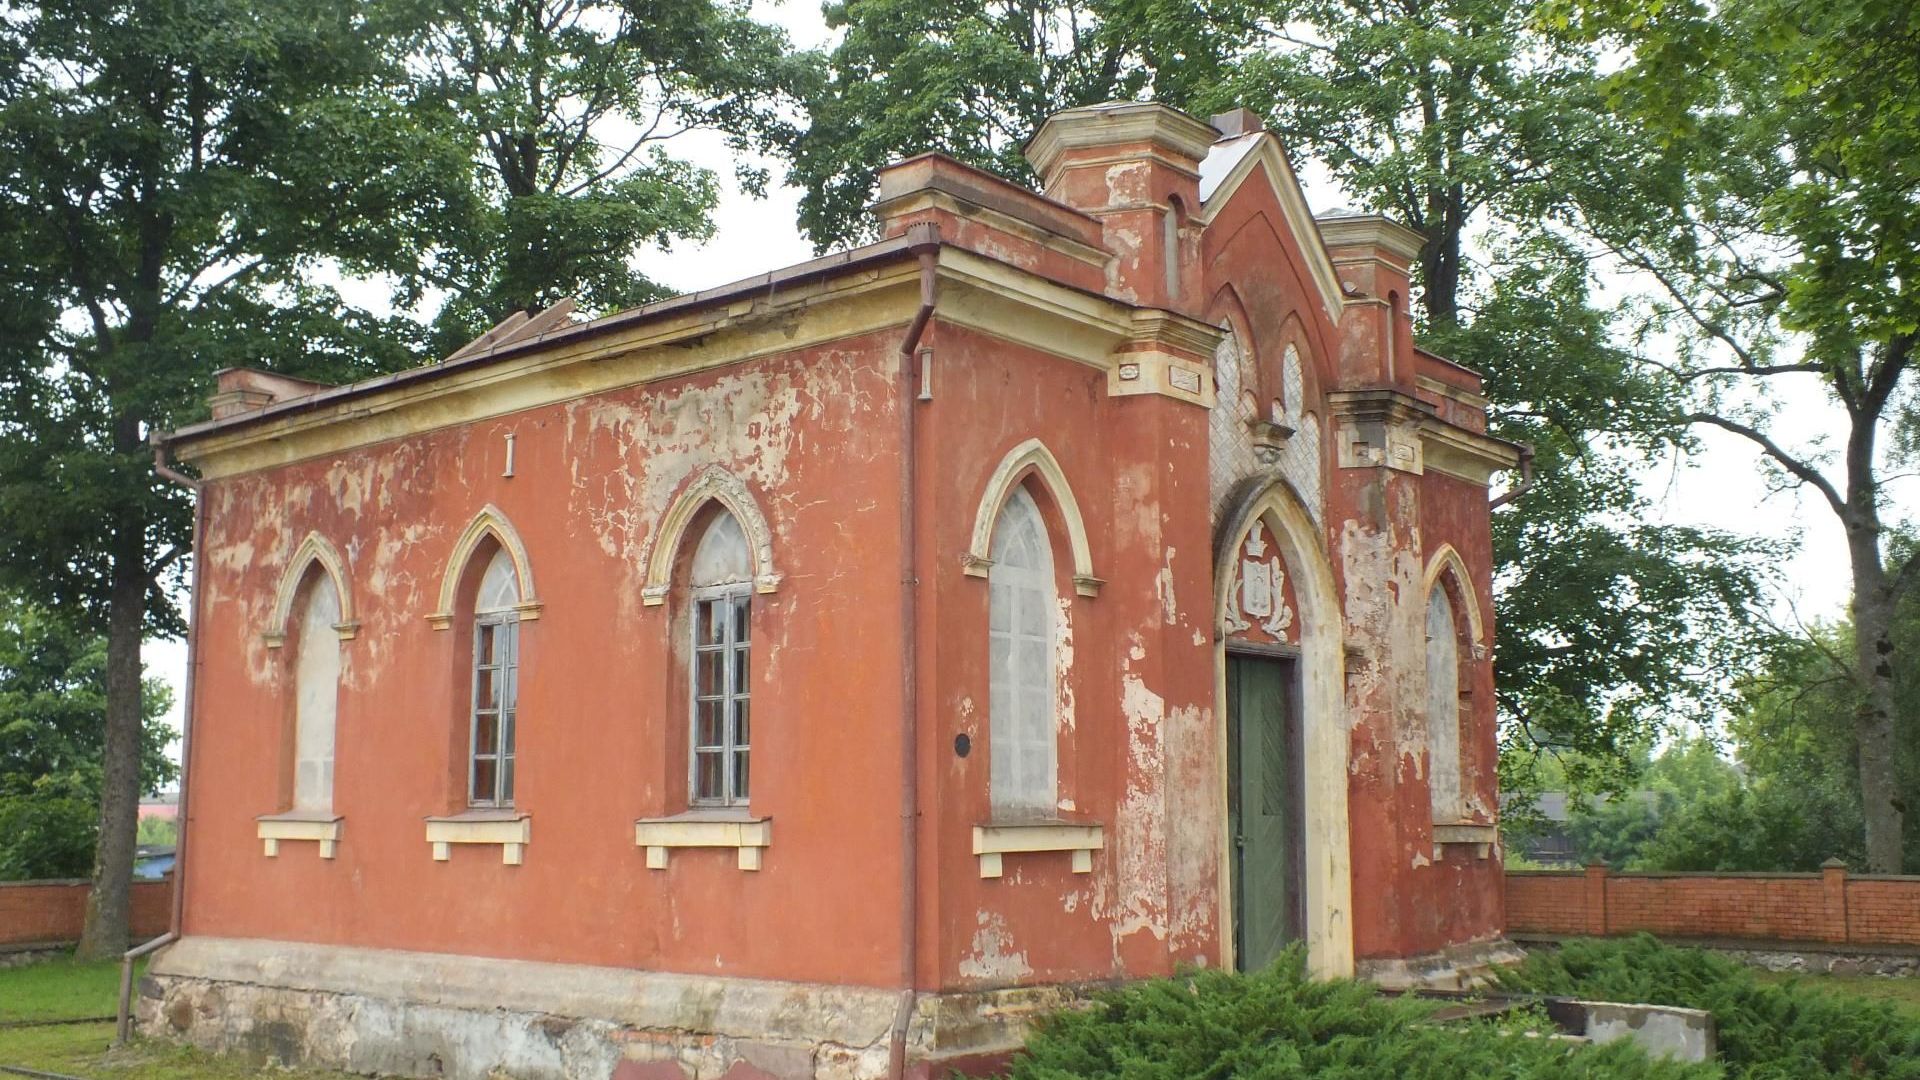 Raguvėlė Manor Chapel-Mausoleum